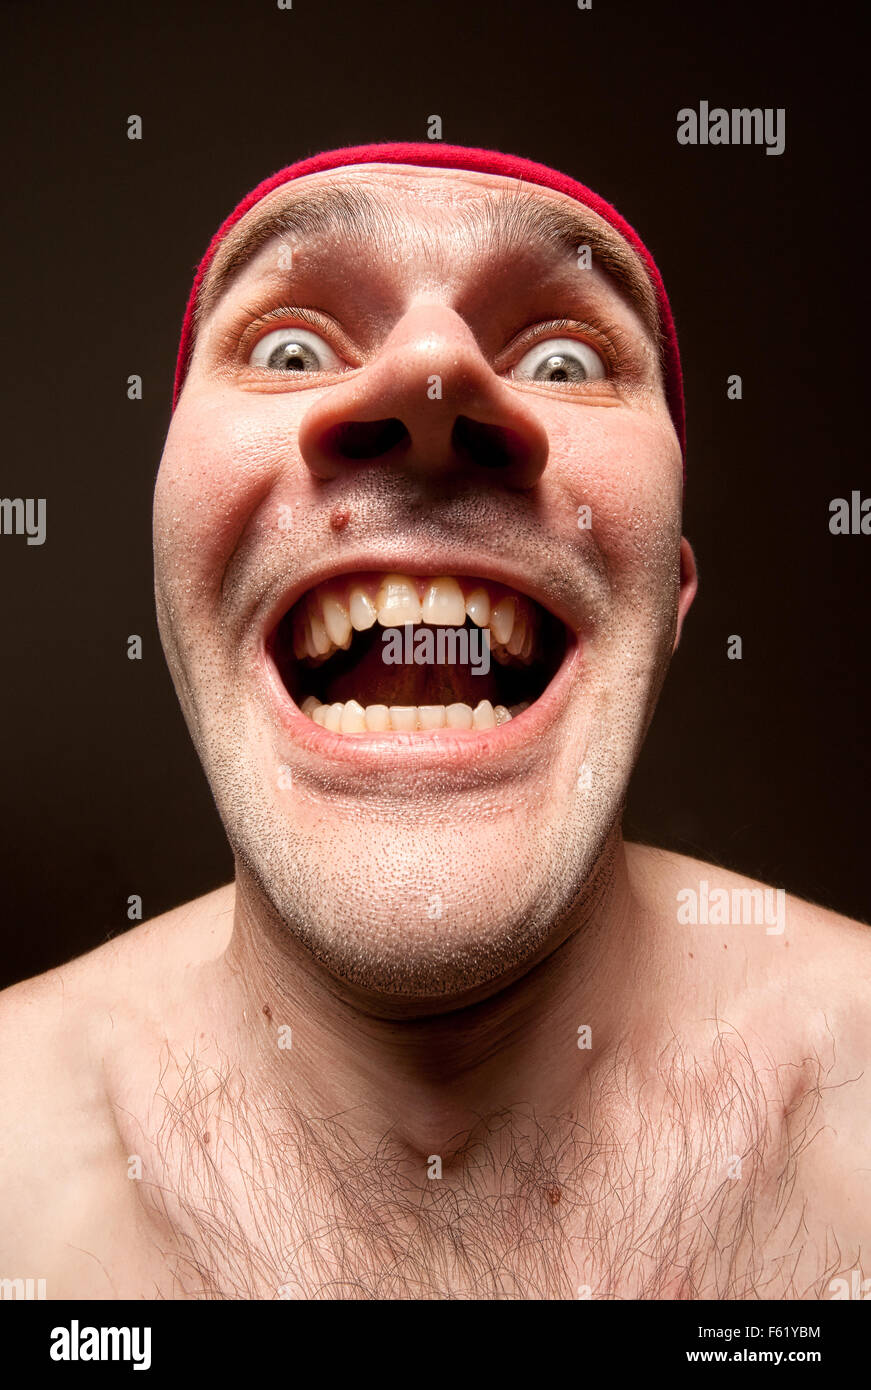 Crazy wacky ugly man stock photo. Image of closeup, crazy - 11673970